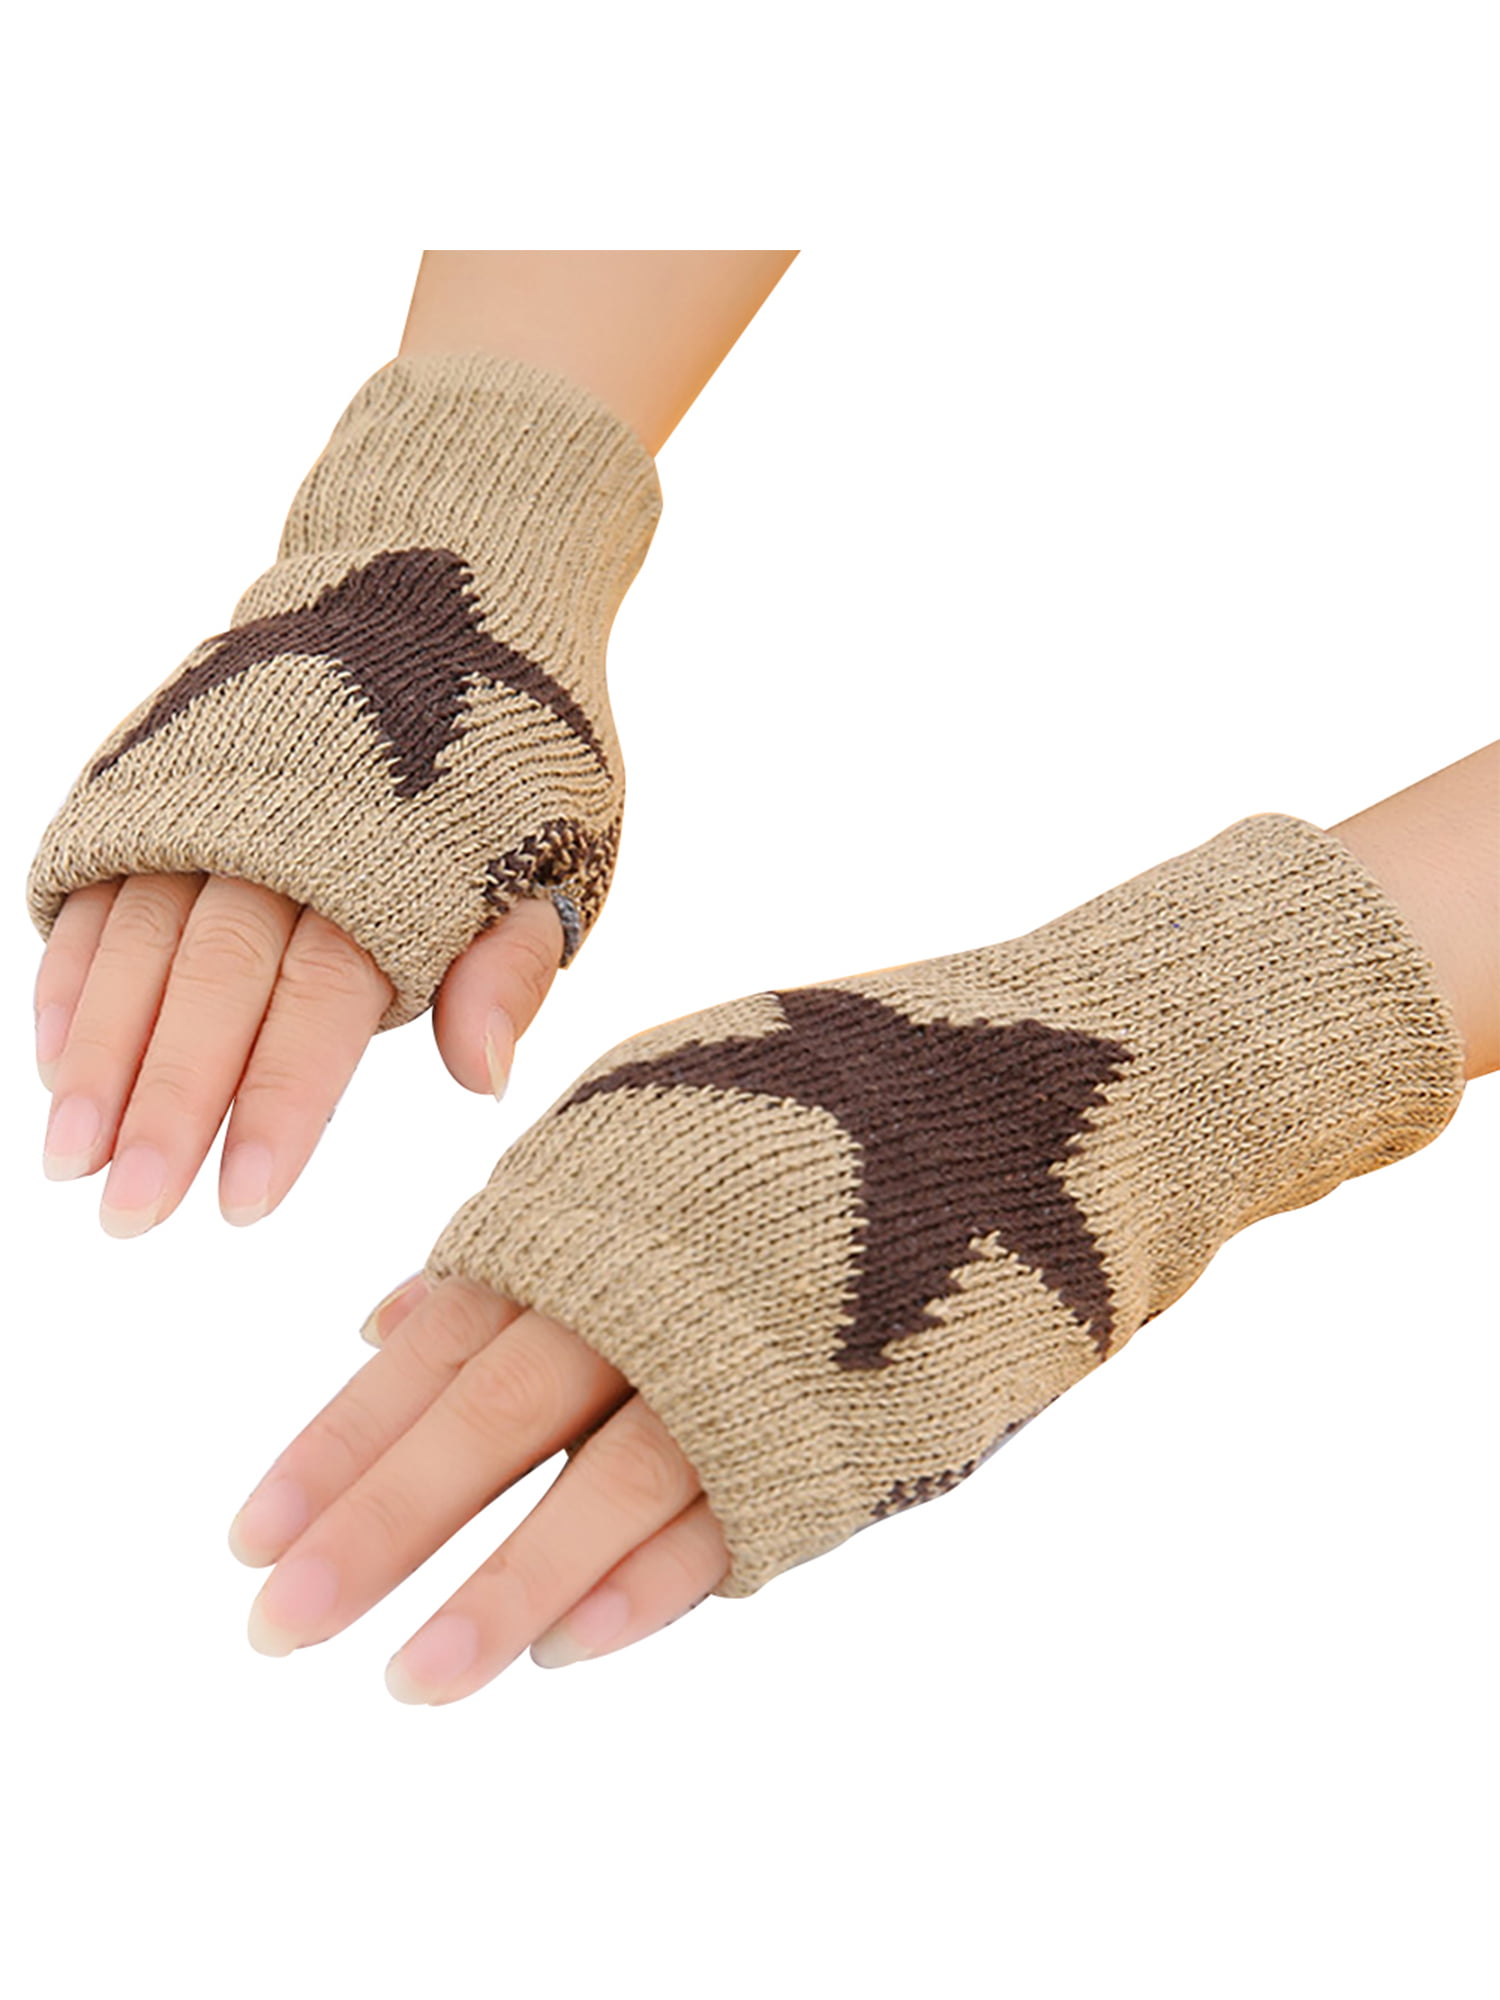 Details about   Cashmere Fingerless Warm Winter Gloves Knitting Half Finger Gloves 